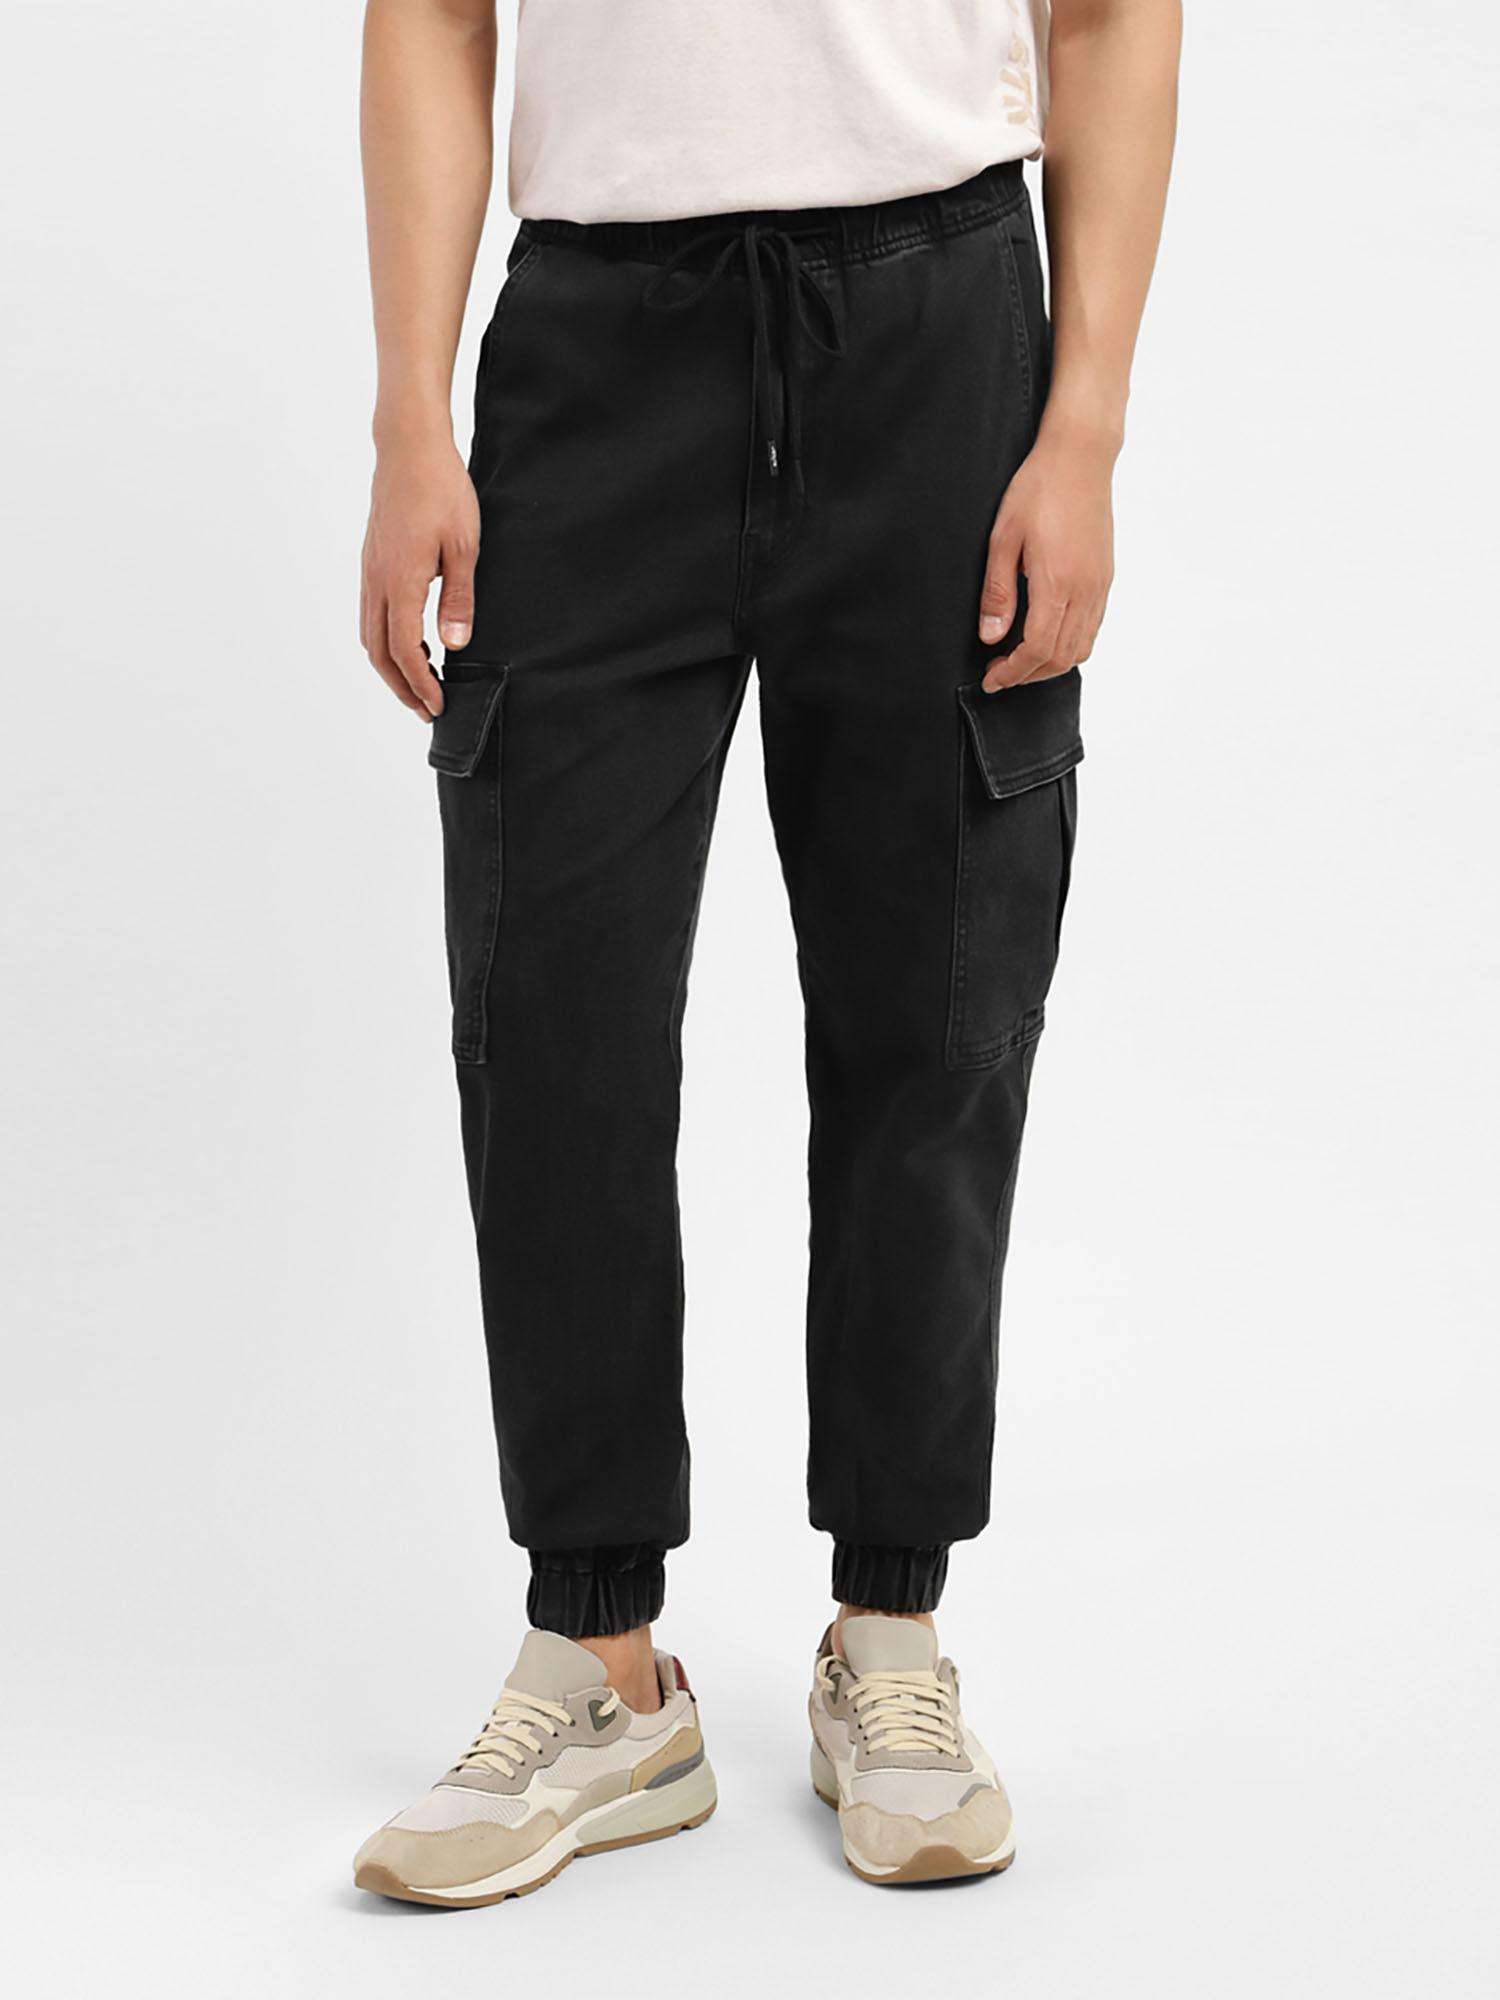 men's-black-jogger-fit-trousers